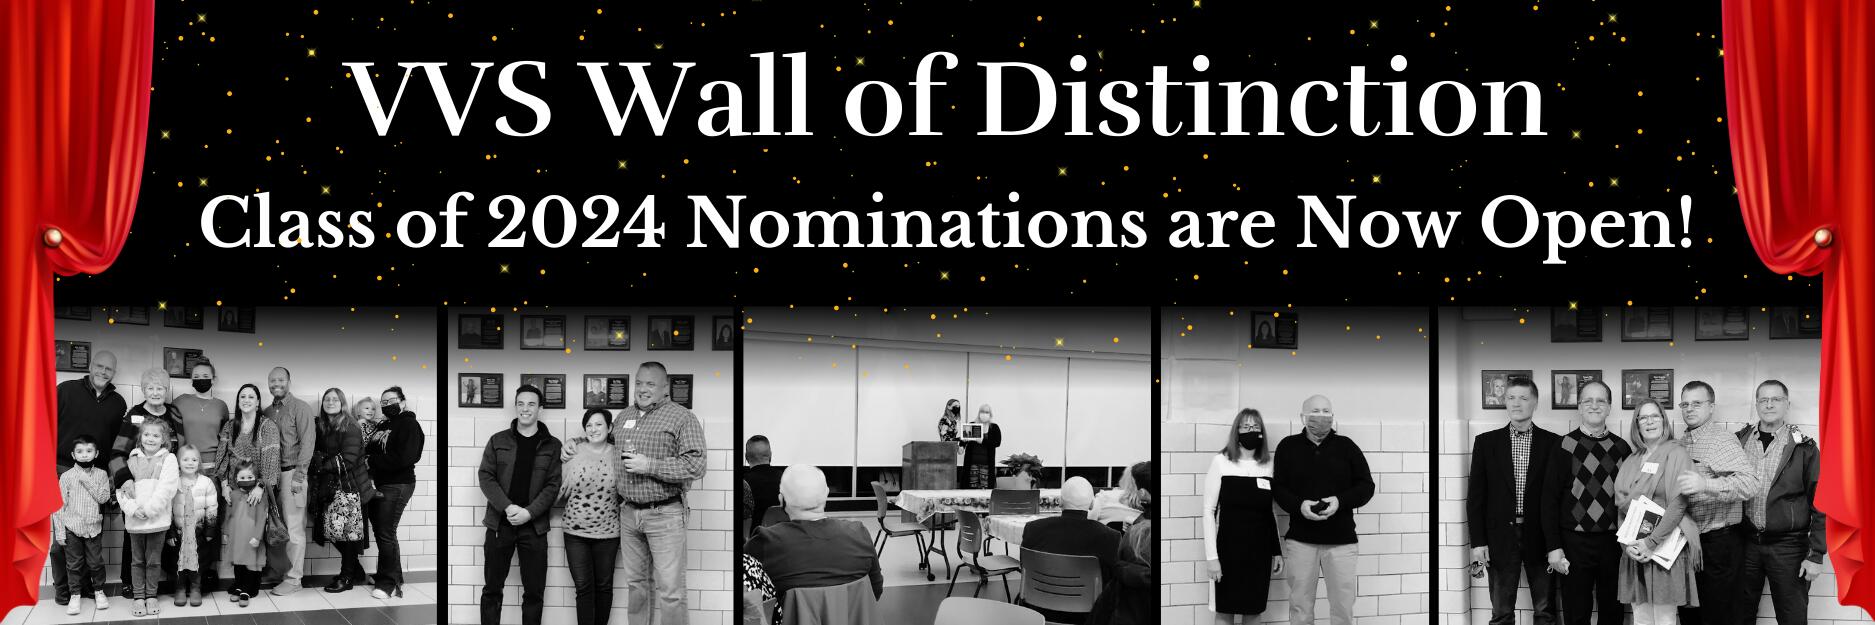 VVS Wall of Distinction